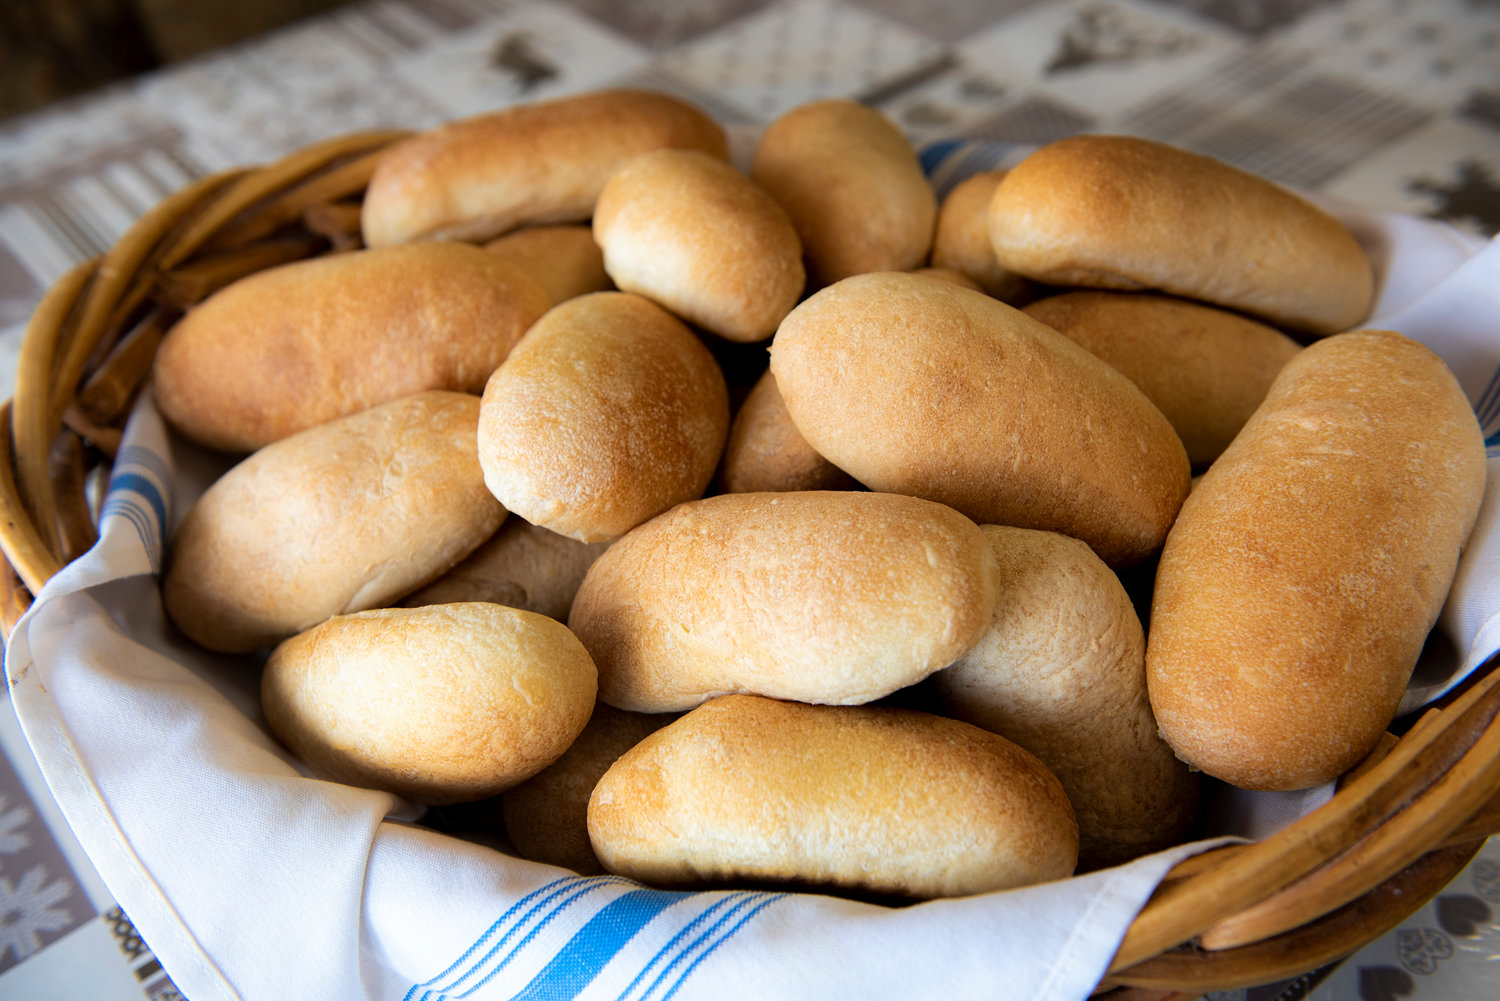 A basket of fresh-baked brötchen rolls.